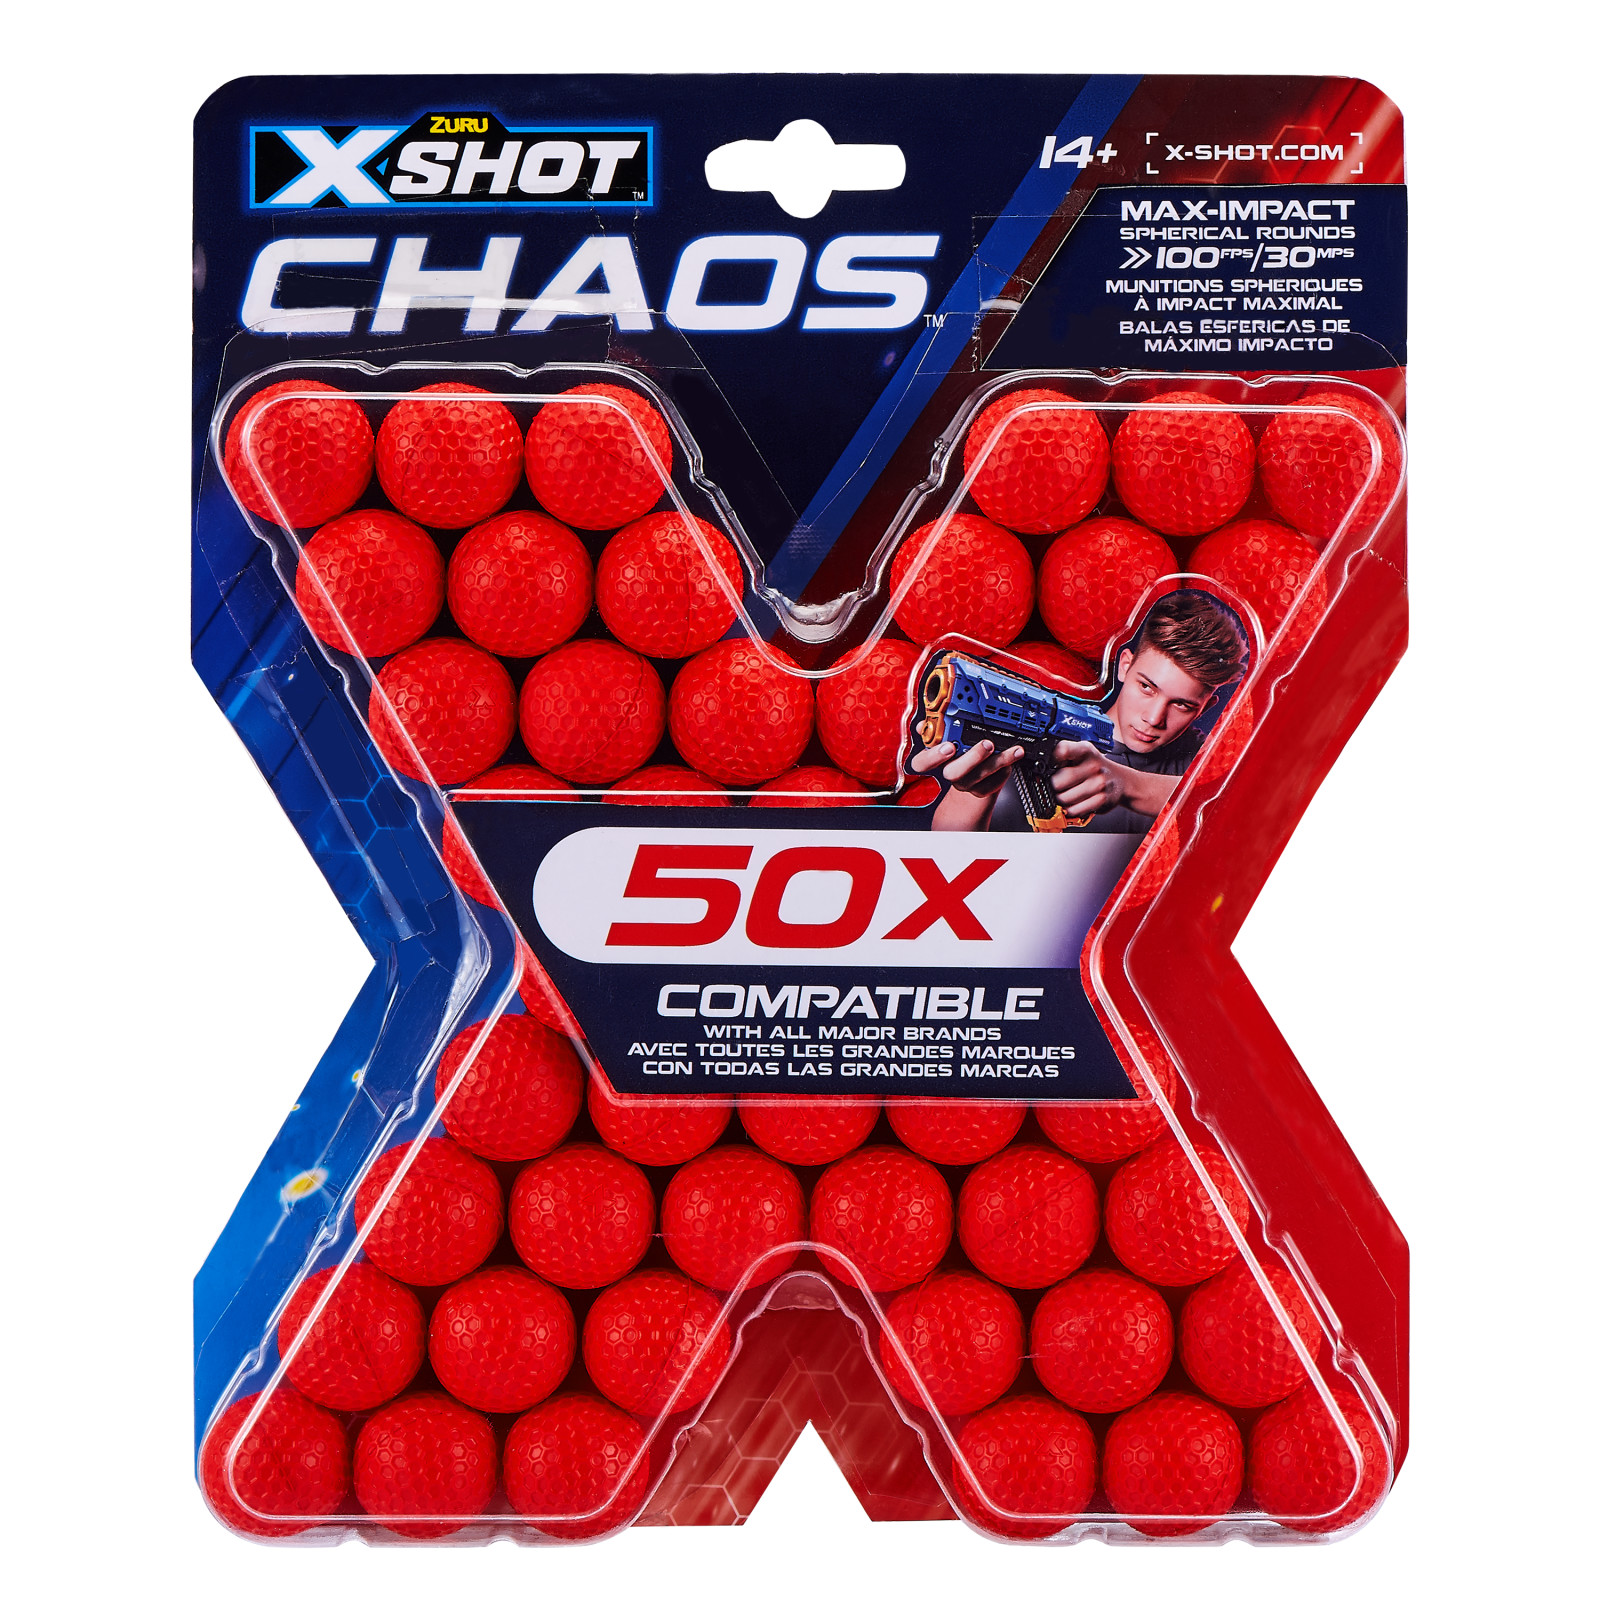 X-Shot Chaos Round Blaster Refill Pack (50 Rounds) by ZURU